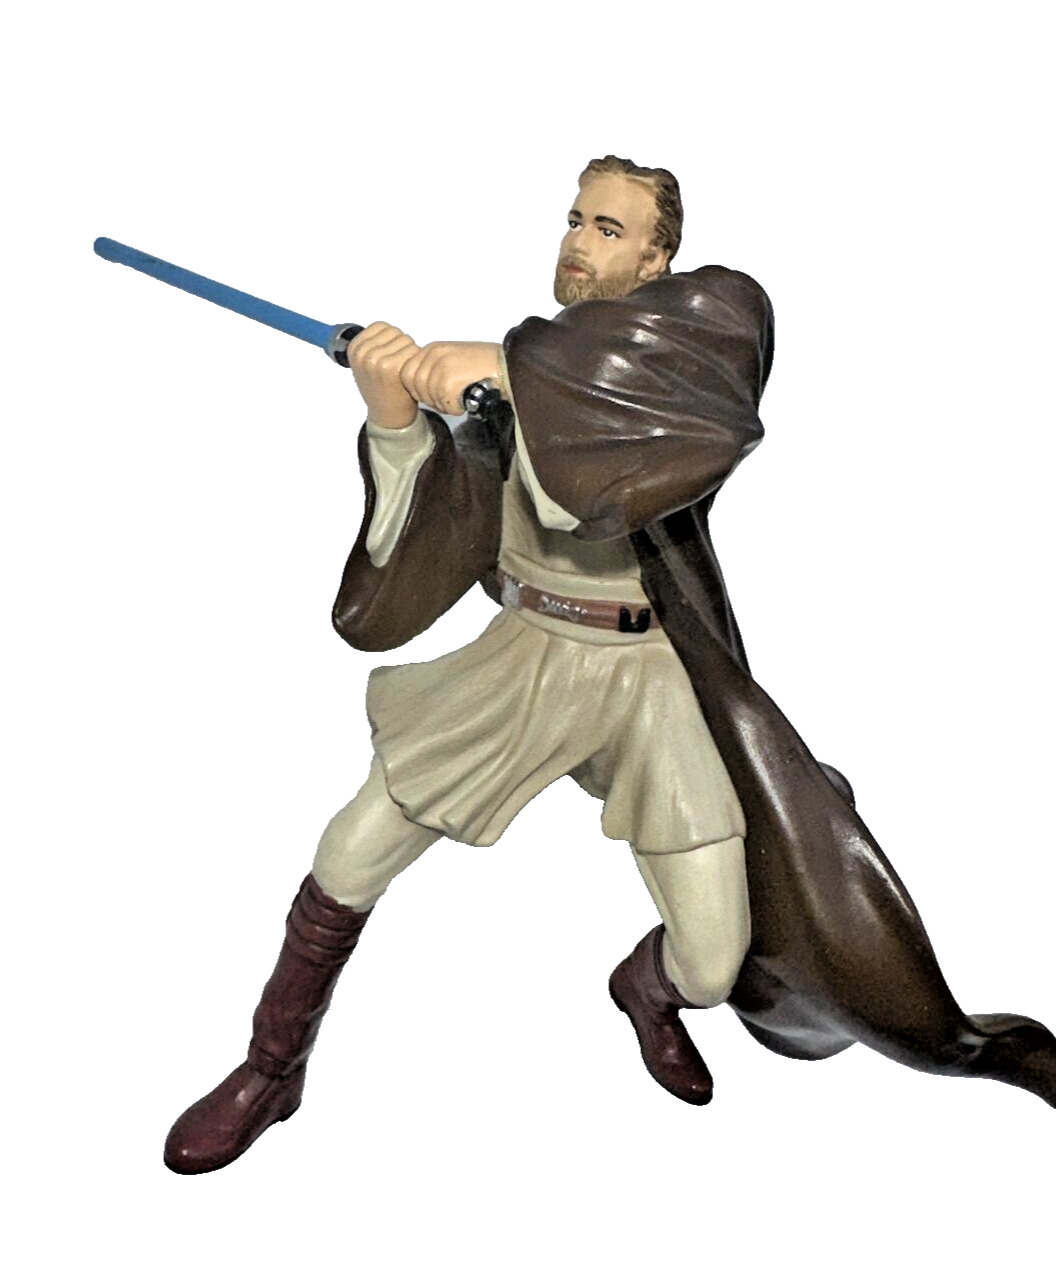 2002 Hallmark Ornament ~ Star Wars - Obi-Wan Kenobi, without box as pictured